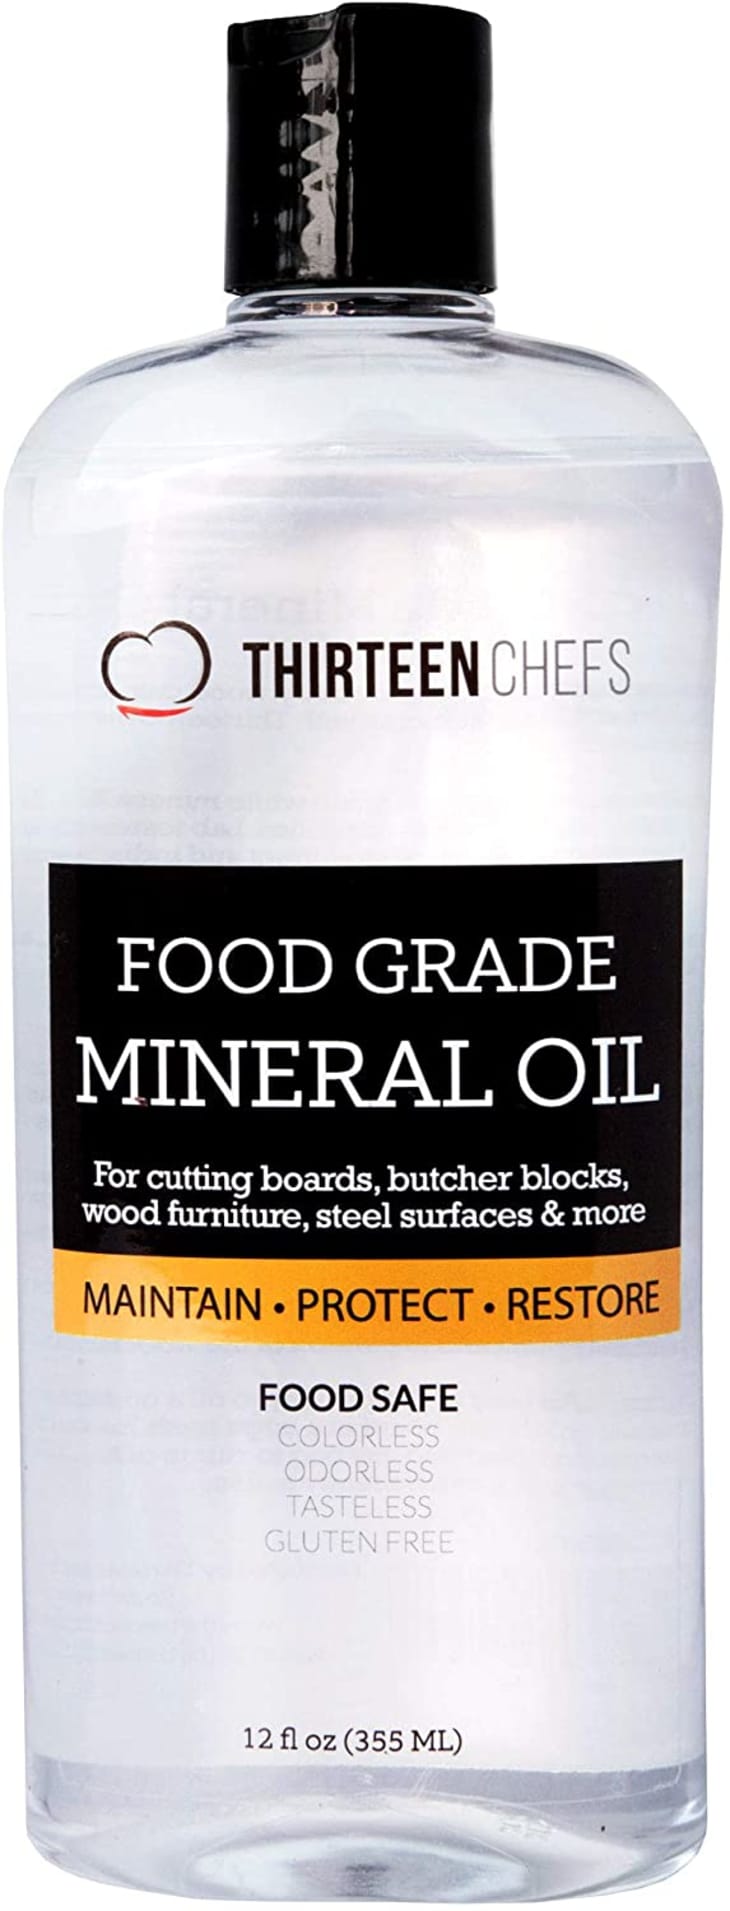 Thirteen Chefs Food Grade Mineral Oil